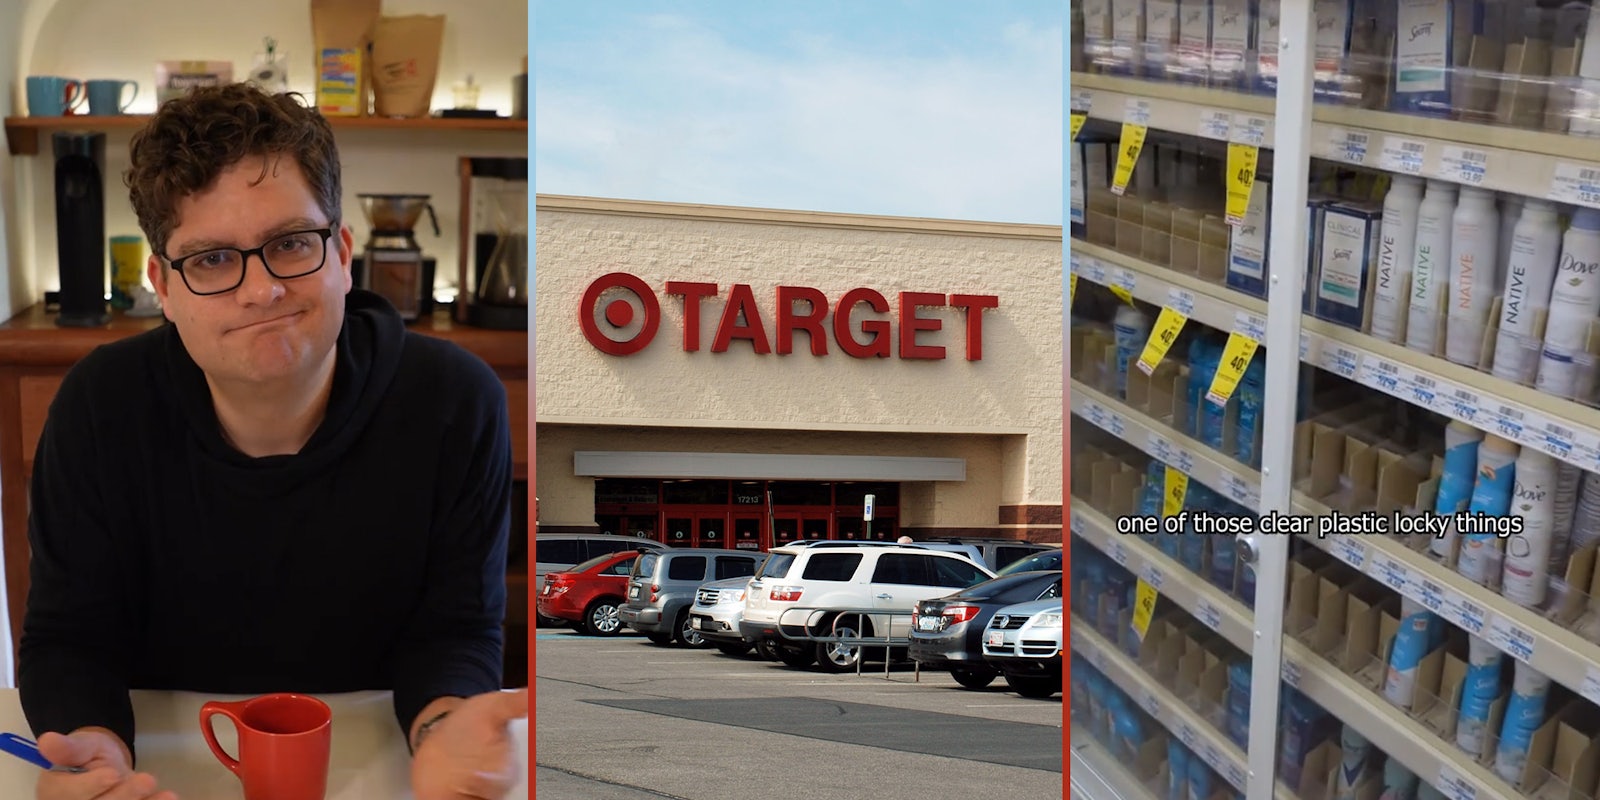 Man calls out Target's 'shampoo vault'